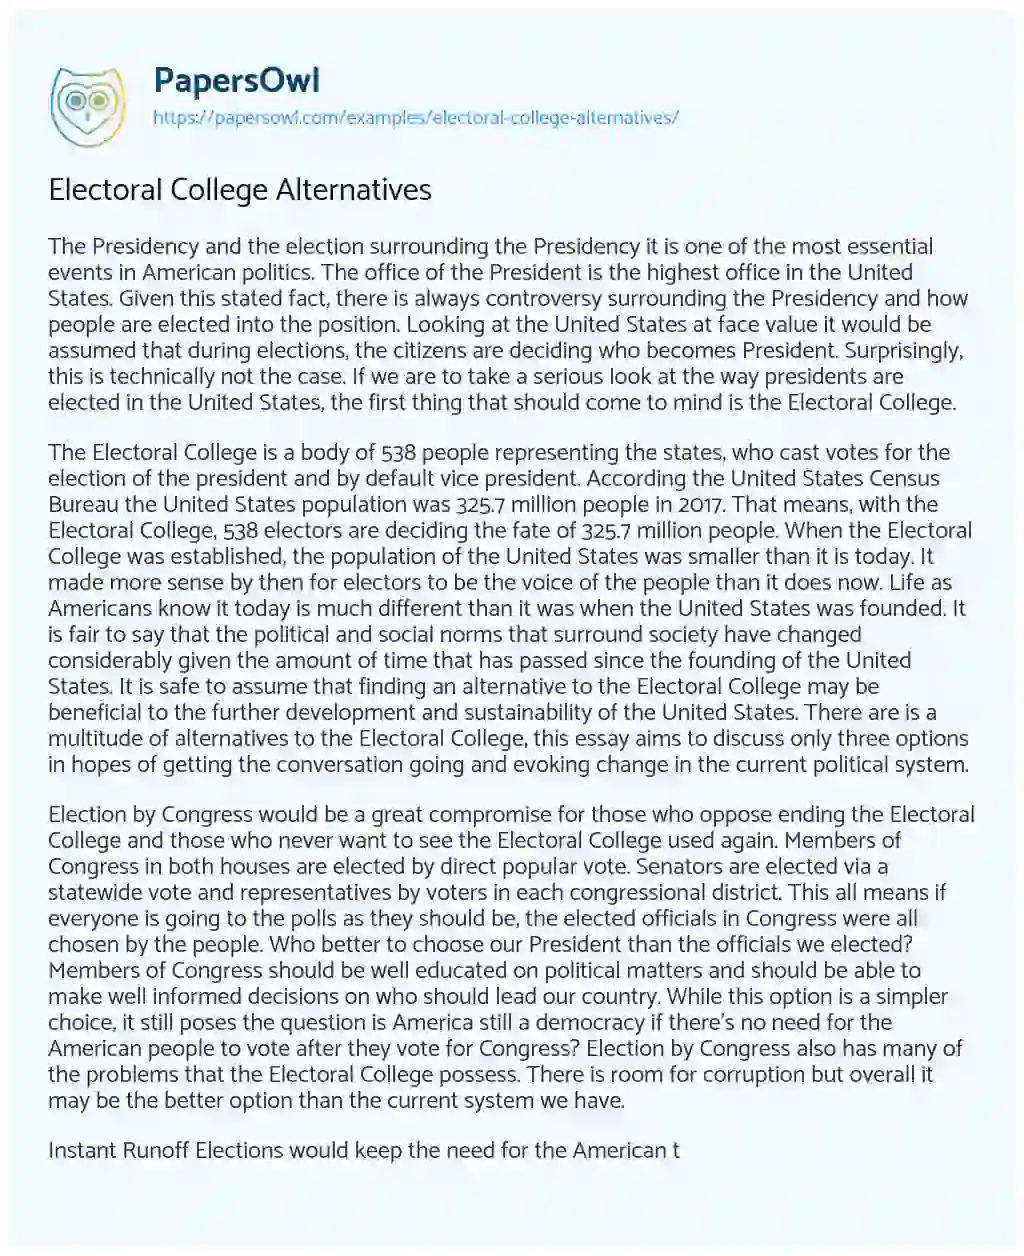 Essay on Electoral College Alternatives